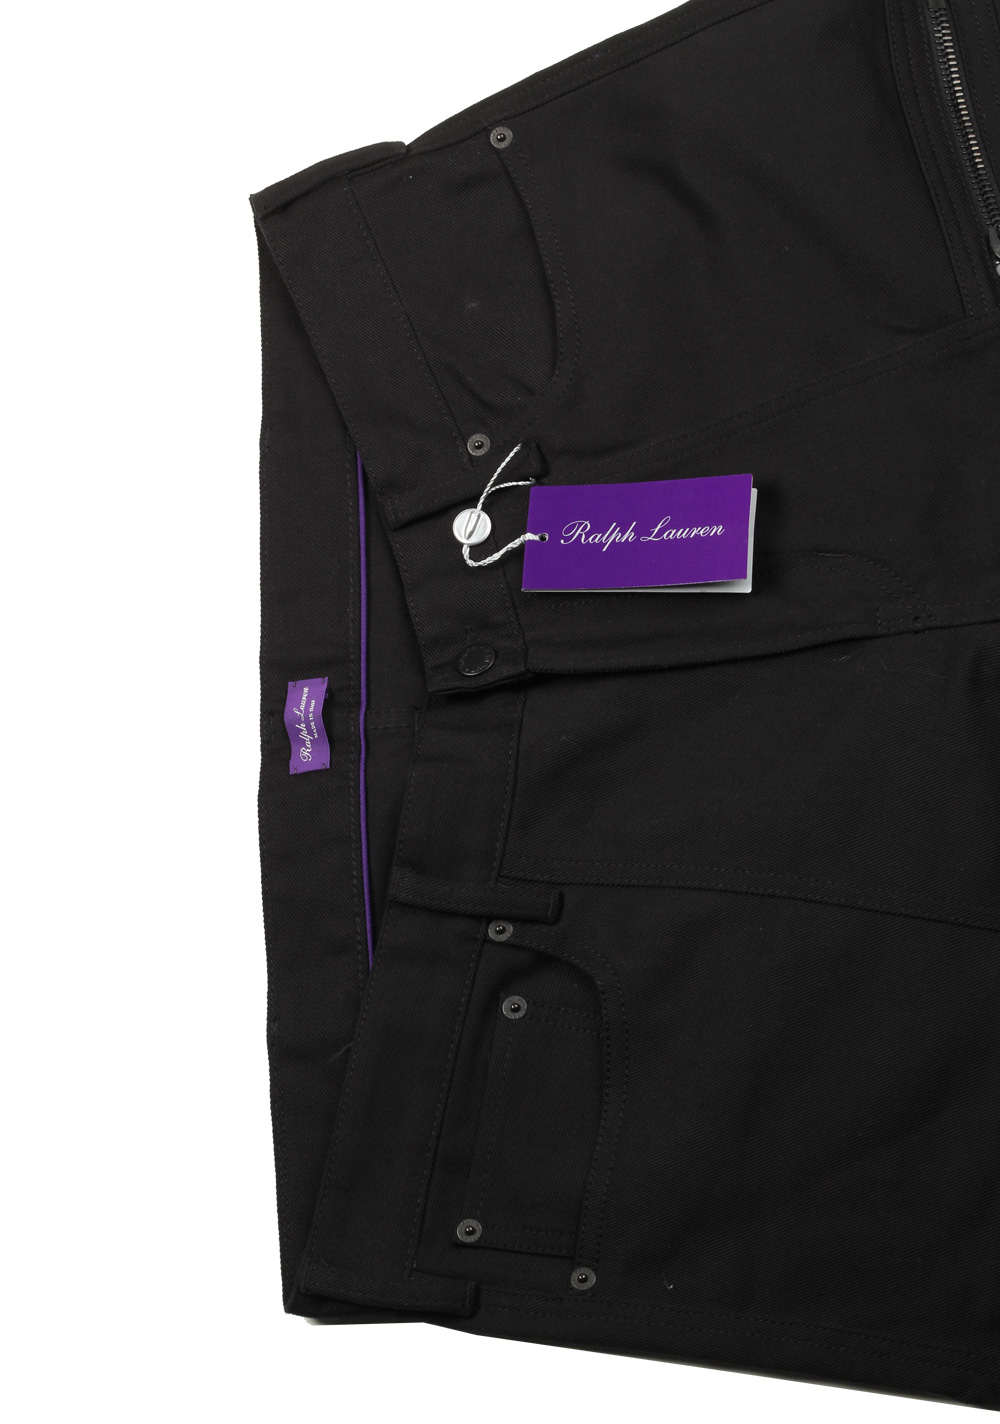 Ralph Lauren Women’s Purple Label 160 Dark Blue Jeans Made In Italy Size 29  NEW